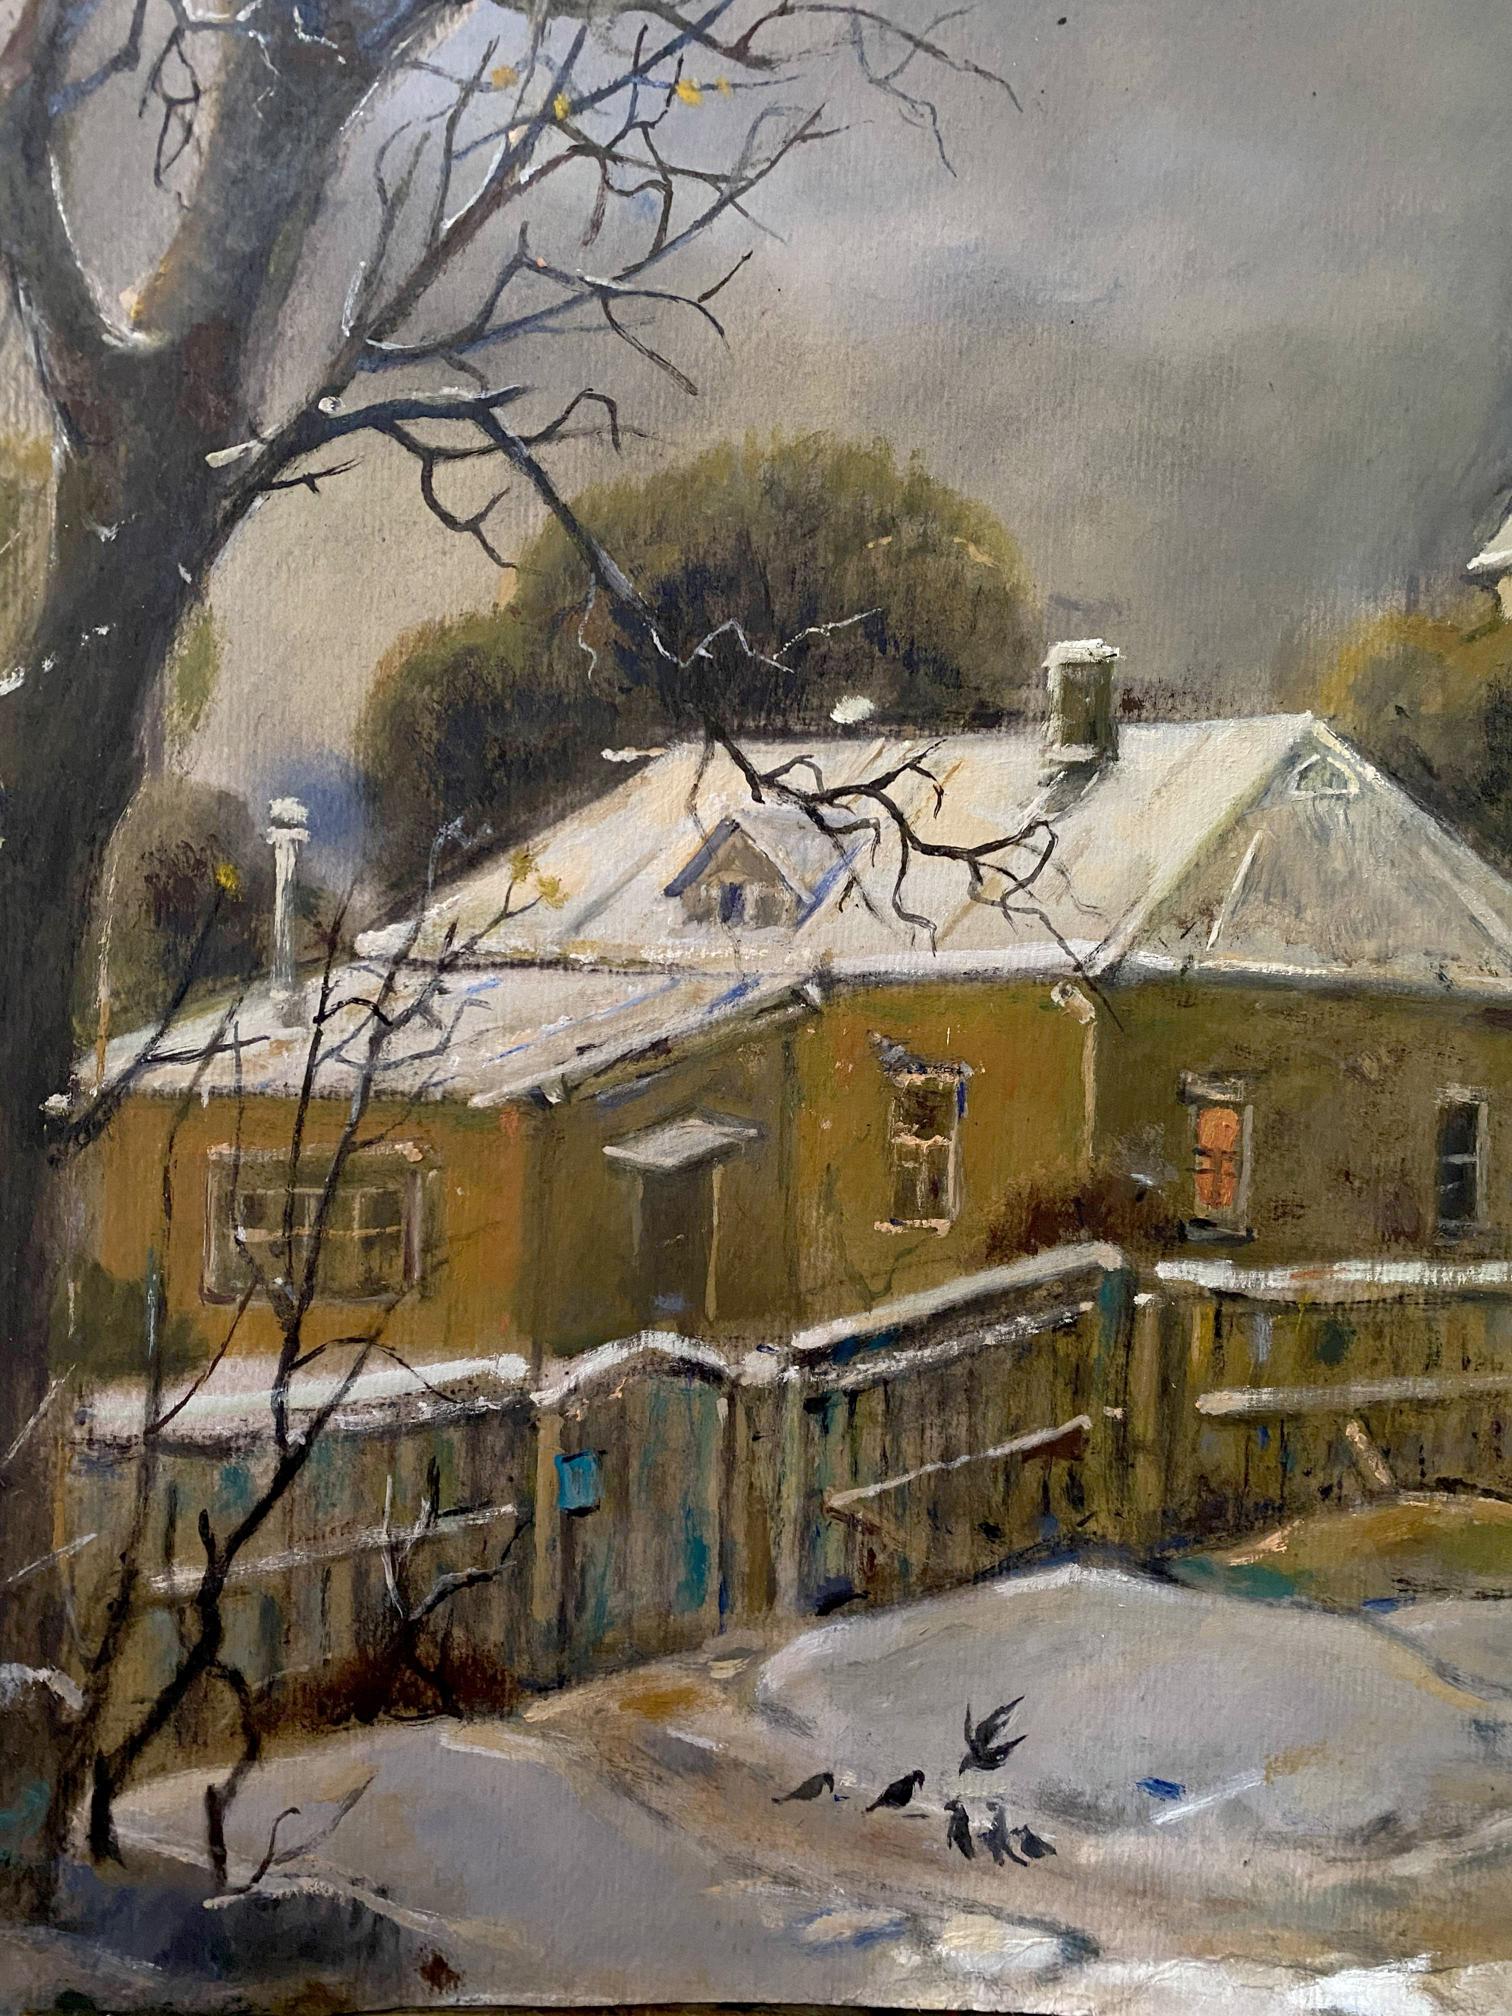 Oleg Arkad'yevich Litvinov's oil painting, "In Winter 2013," captures the serene beauty